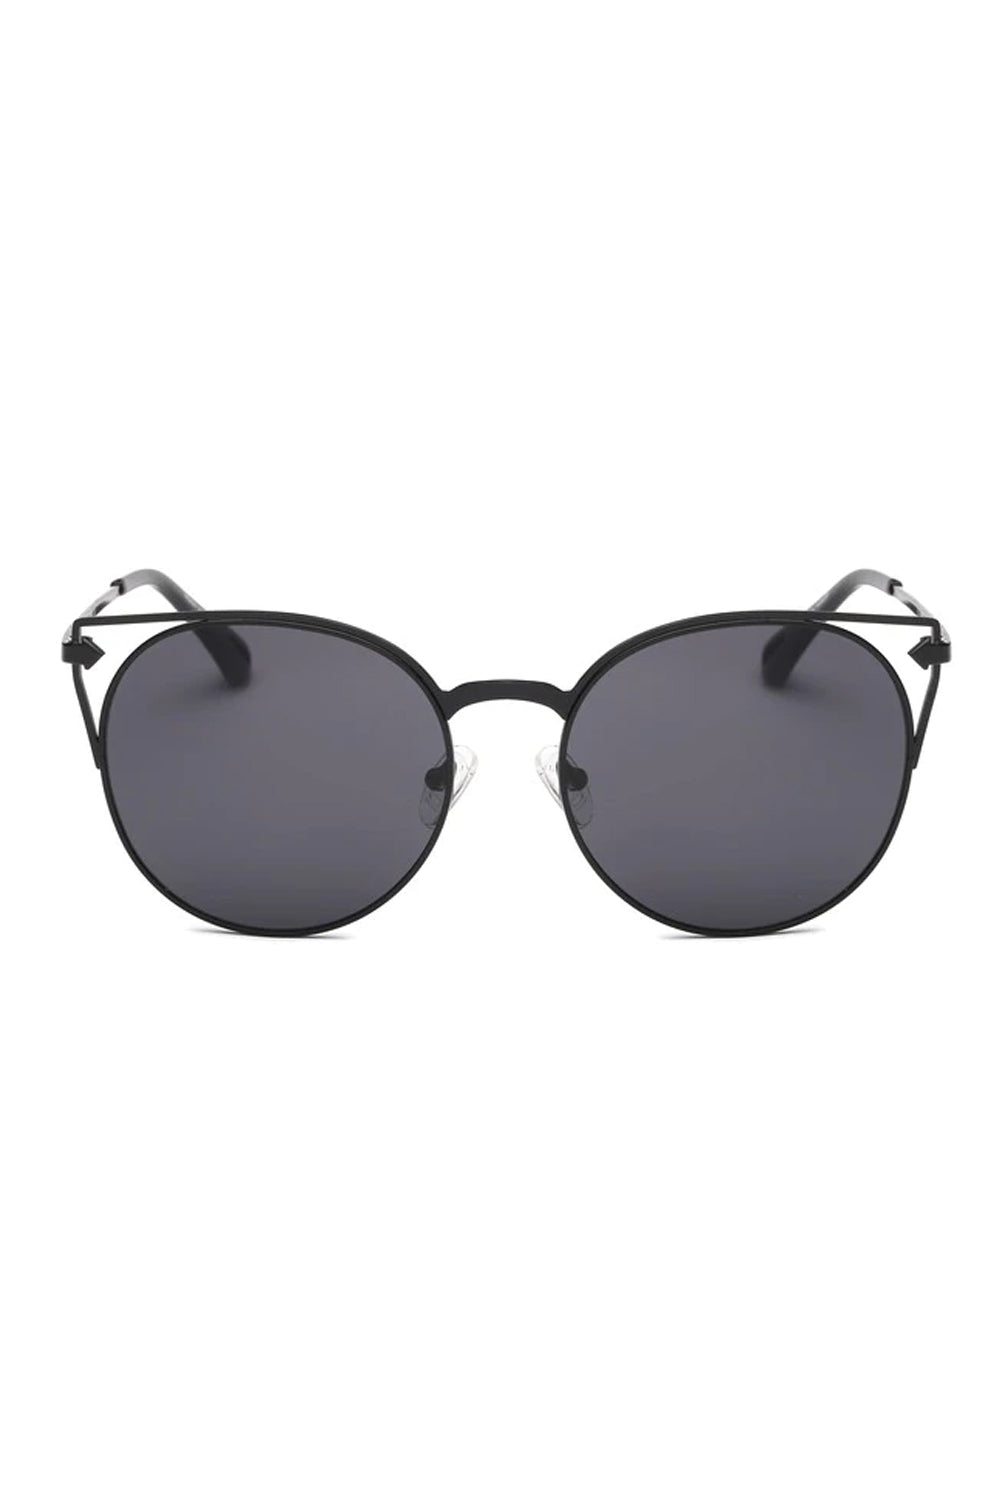 Women Round Cat Eye Fashion Sunglasses